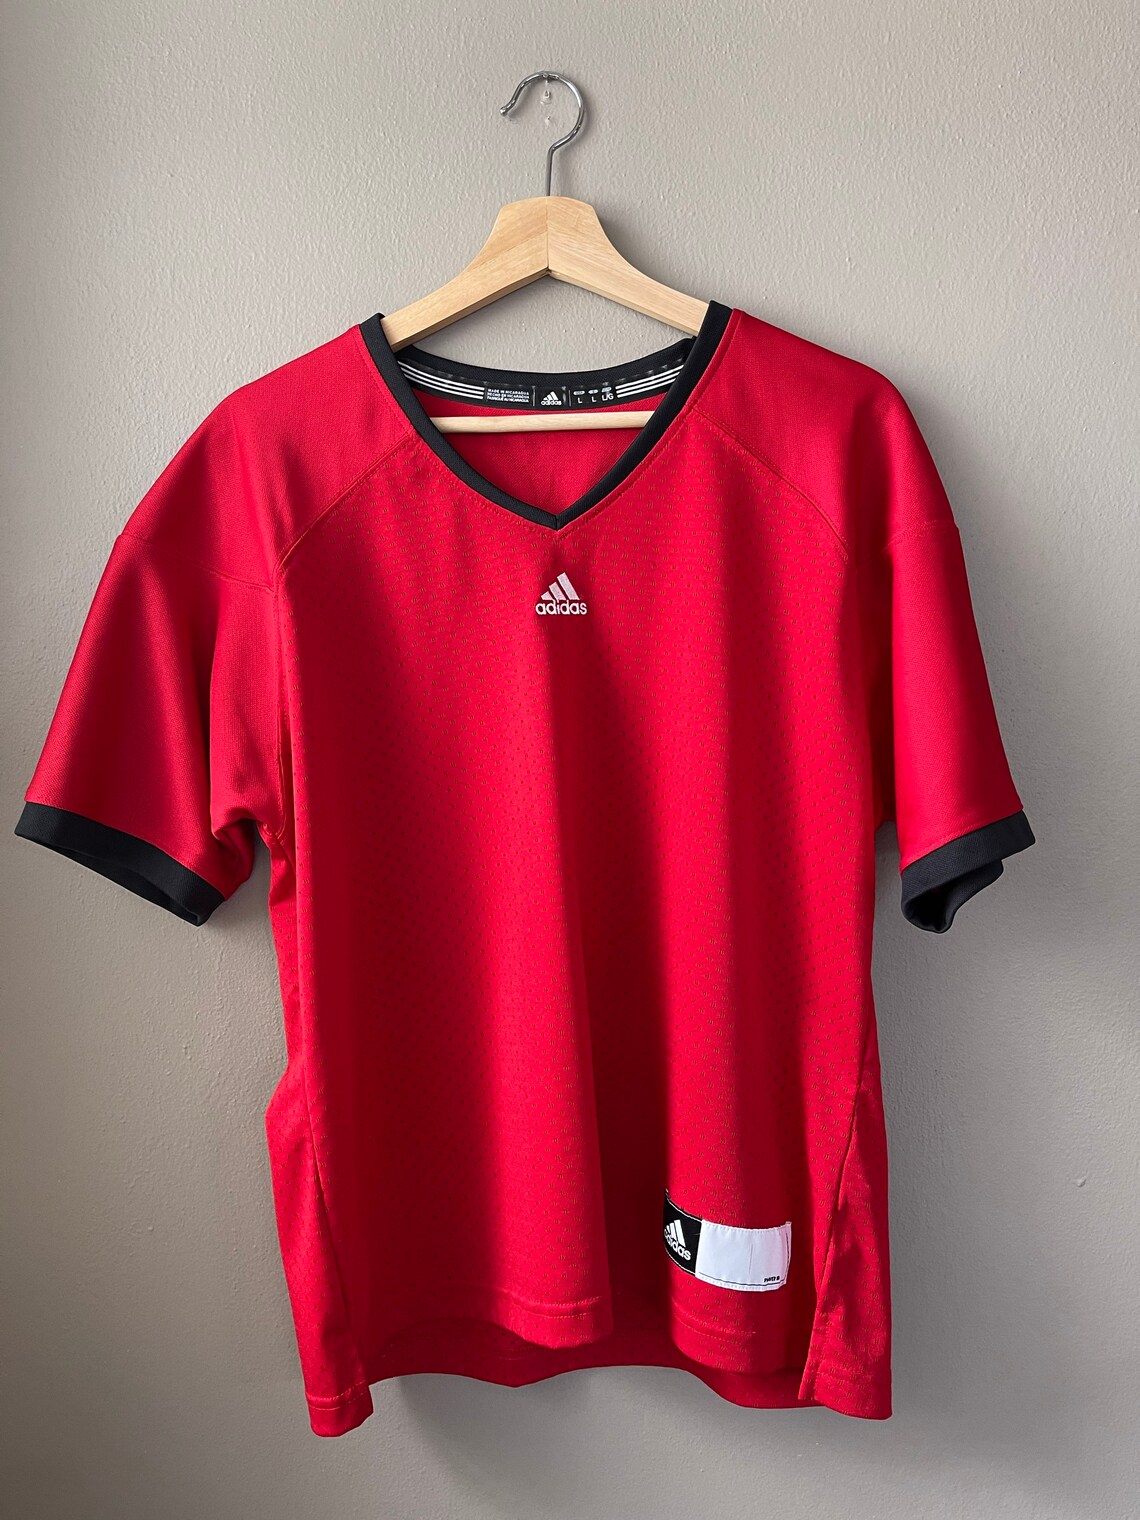 2000s Vintage Adidas Soccer Jersey | Etsy